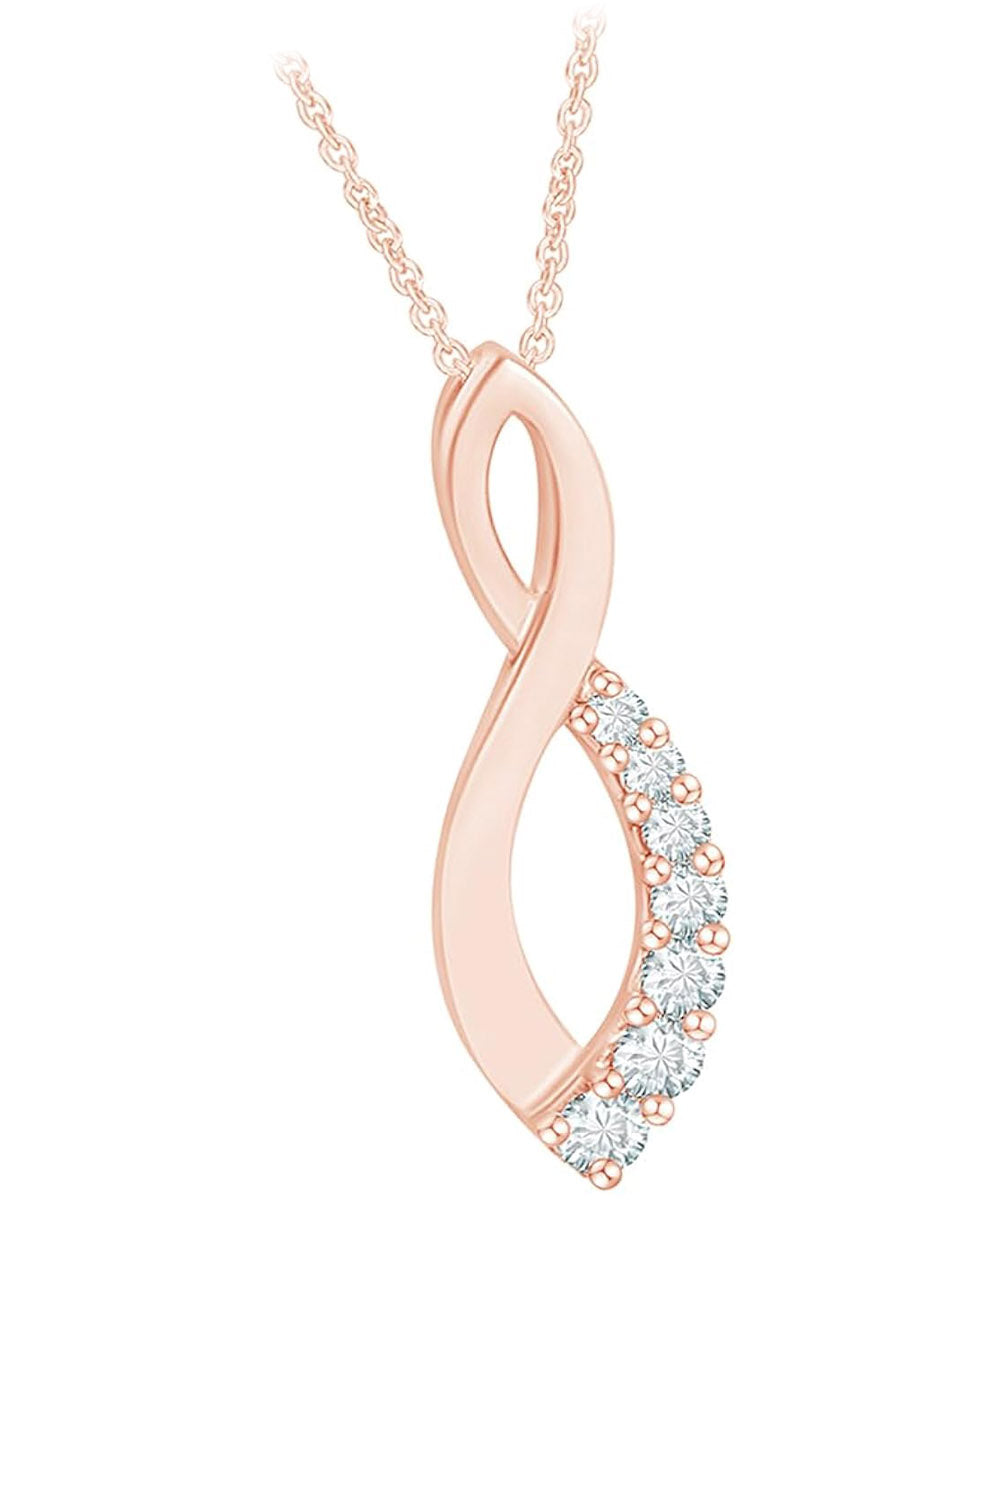 Rose Gold Color Diamond Infinity Pendant Necklace